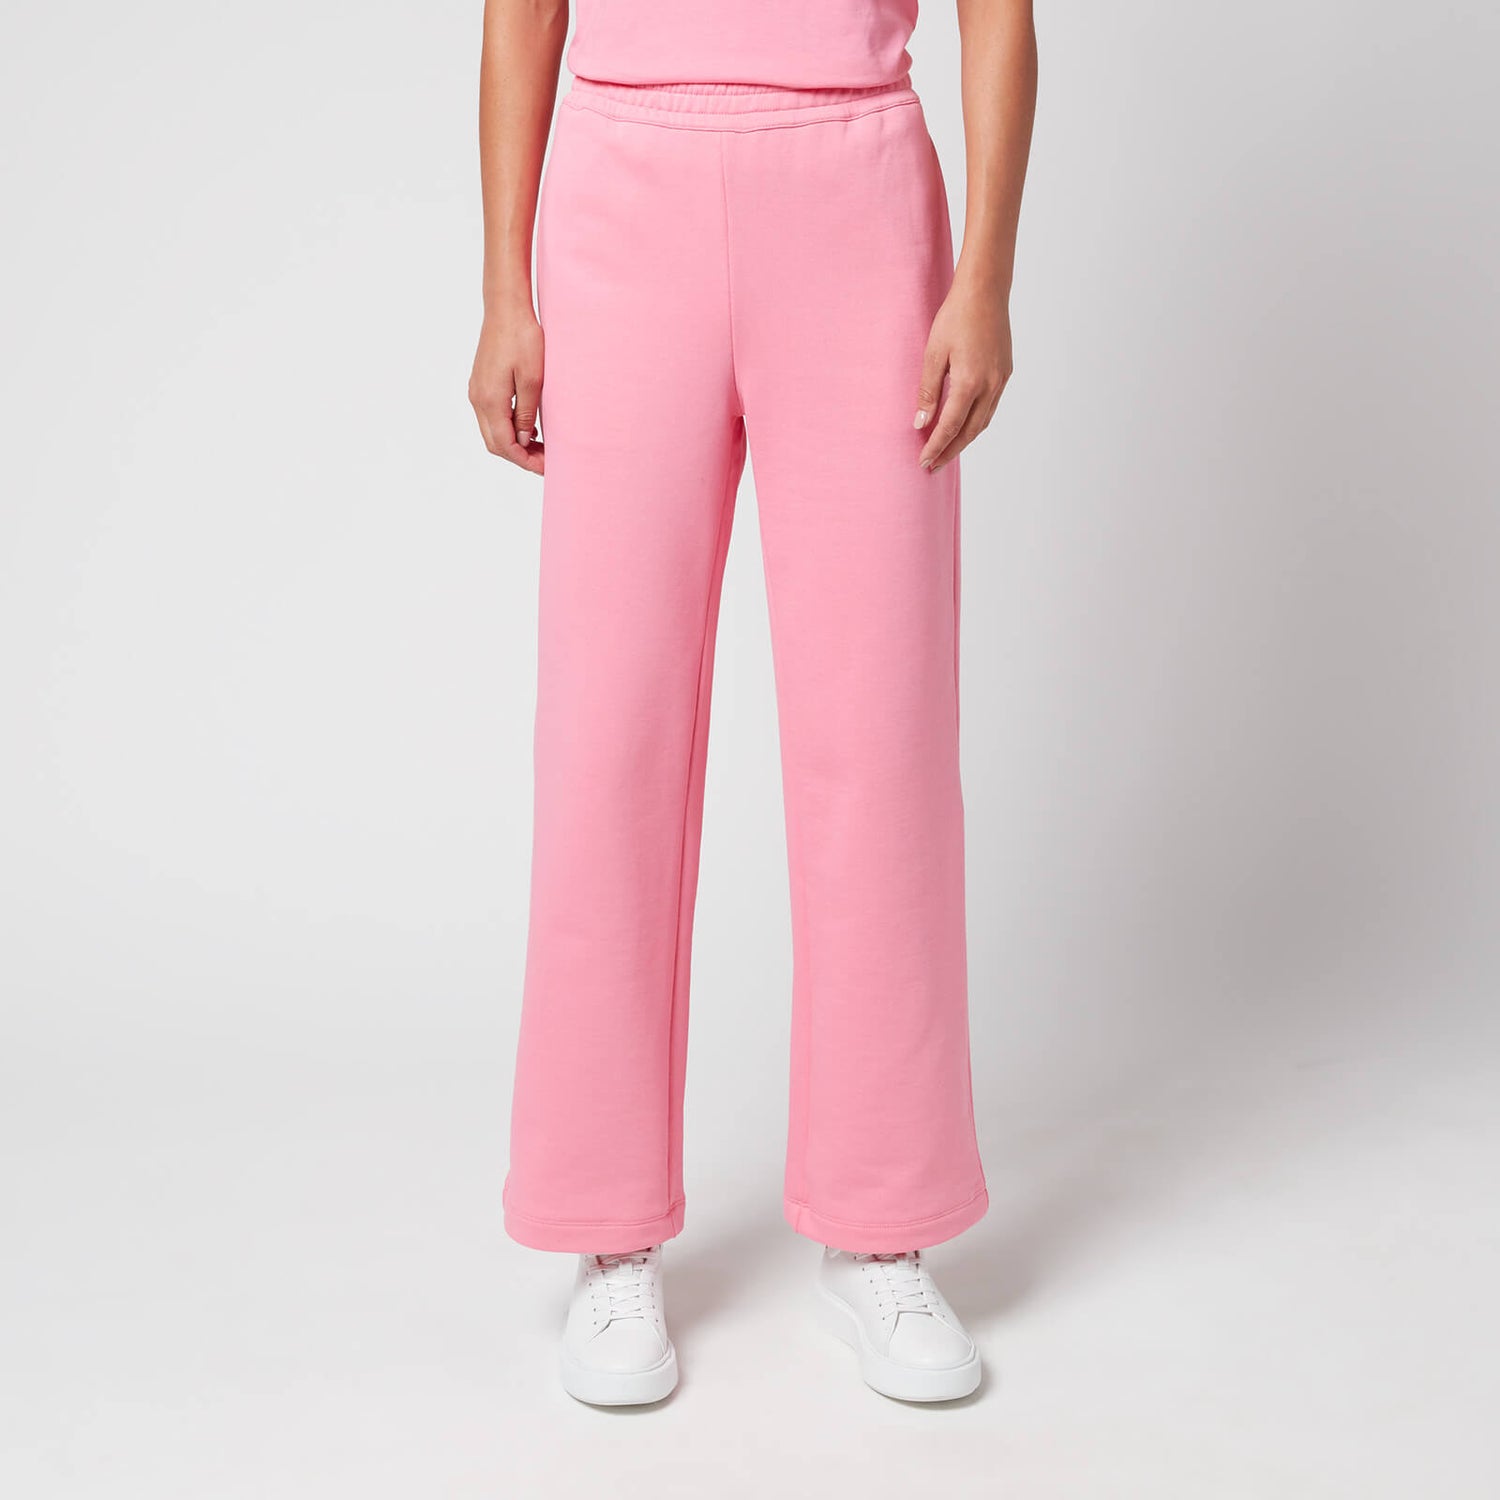 PS Paul Smith Women's Happy Sweatpants - Pink - XS